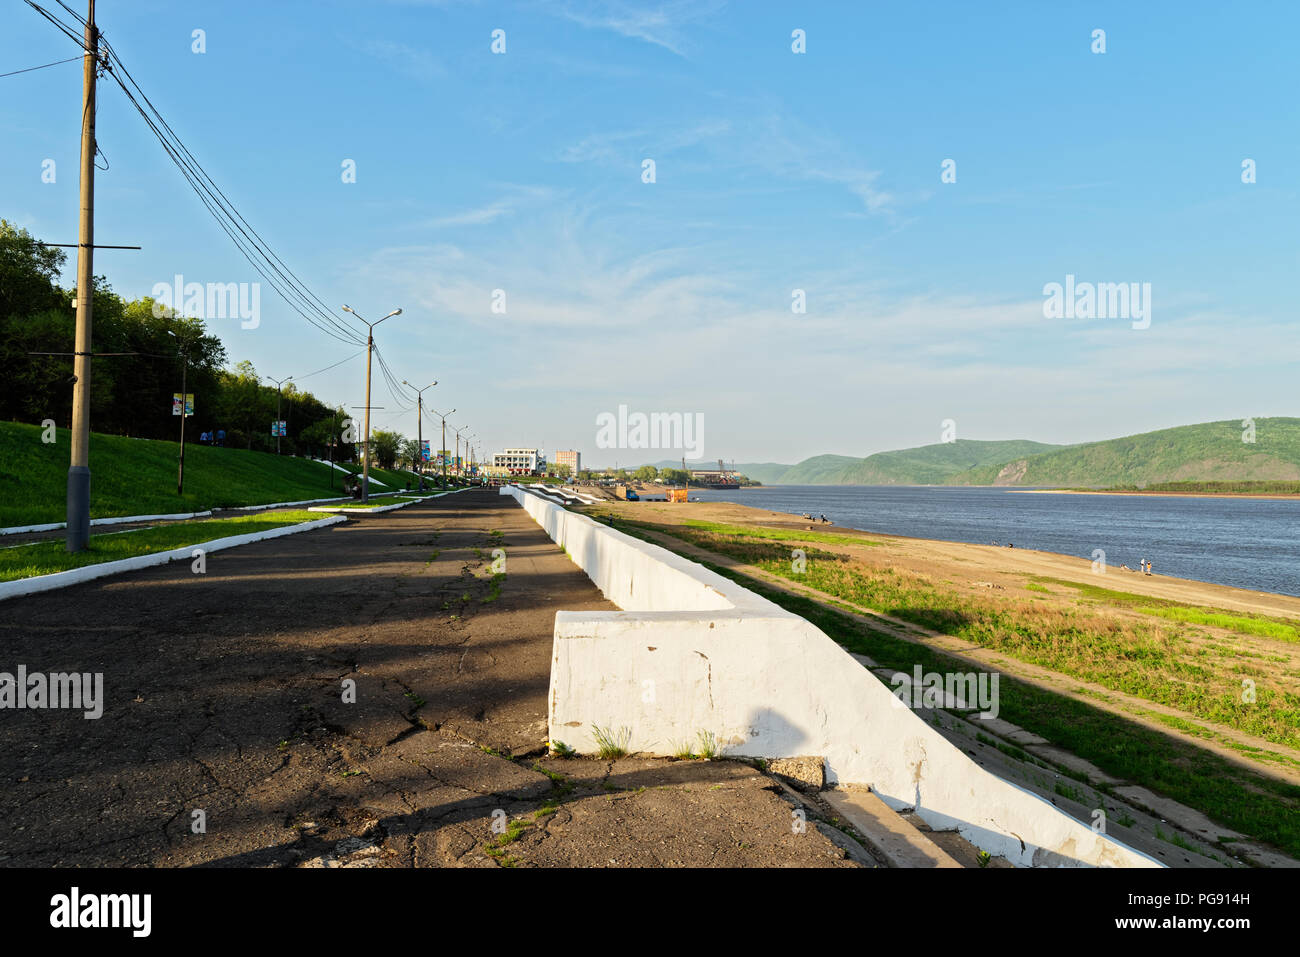 Promenade on the shore of Amur river against blue sky. Komsomolsk-on-Amur, Russia Stock Photo